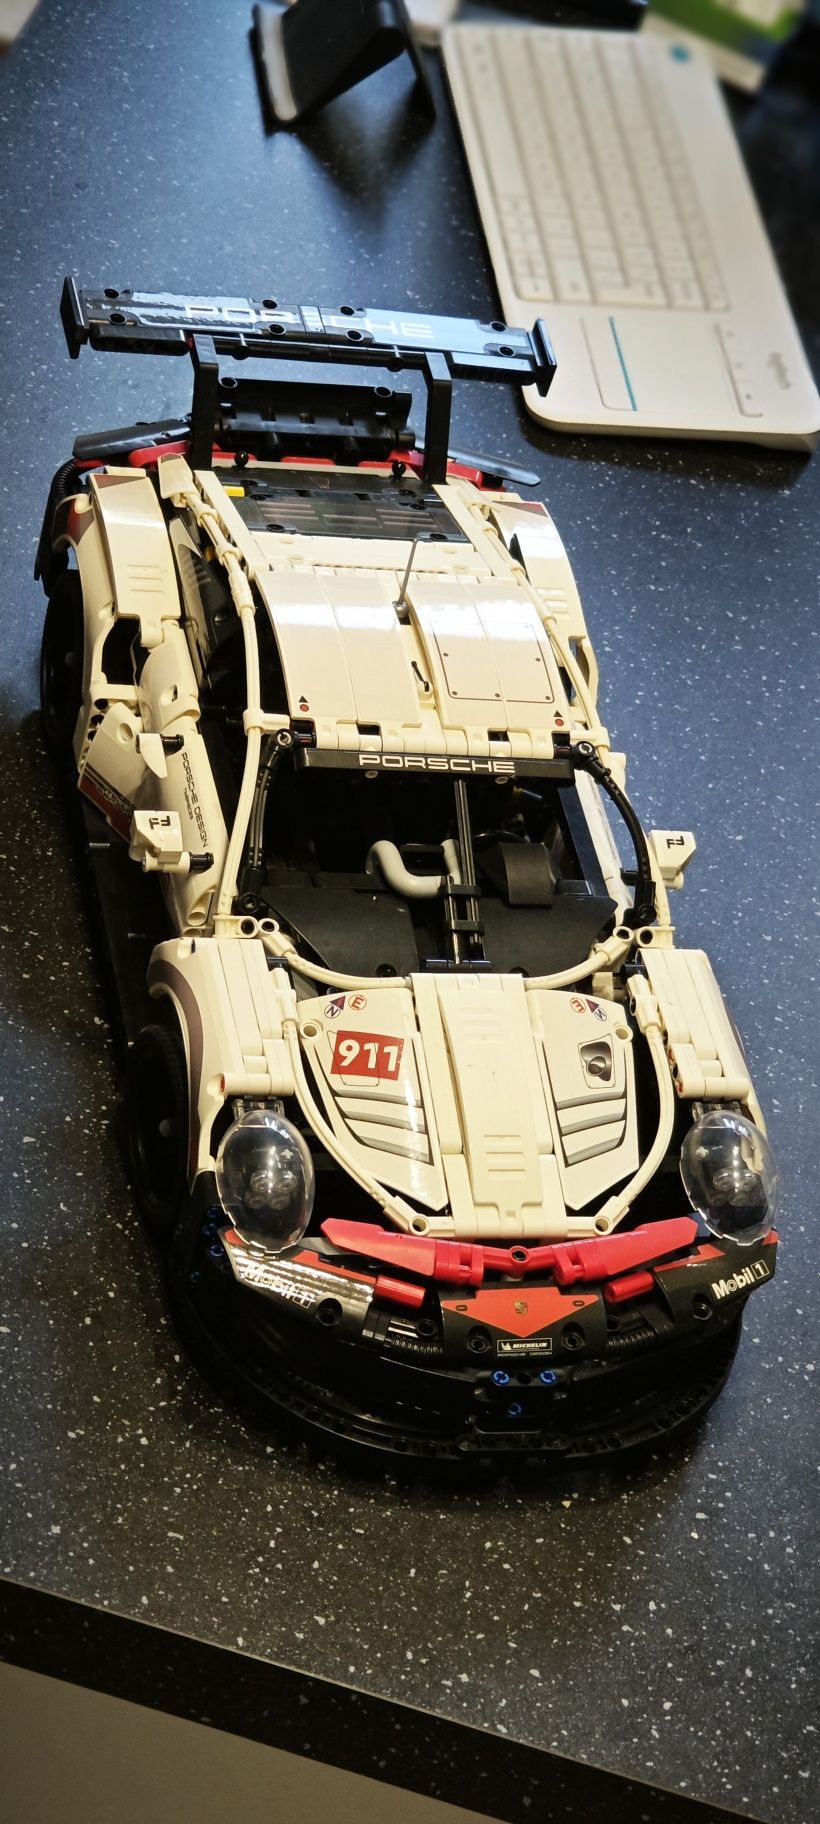 Porsche 911 RSR technic 42096